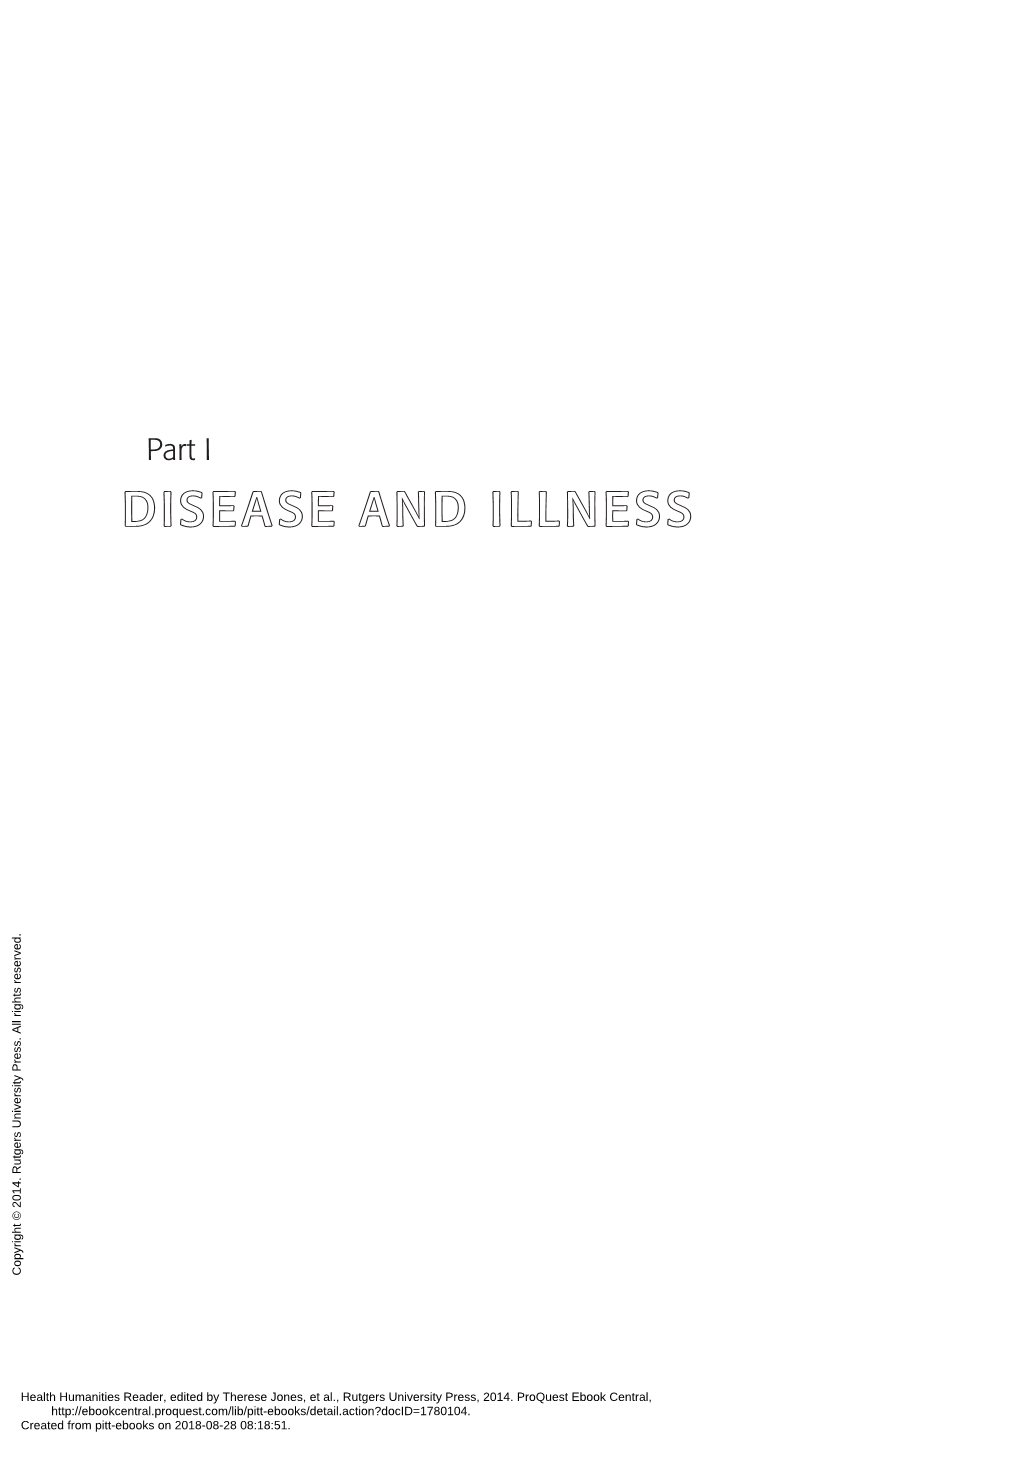 Disease and Illness Copyright © 2014